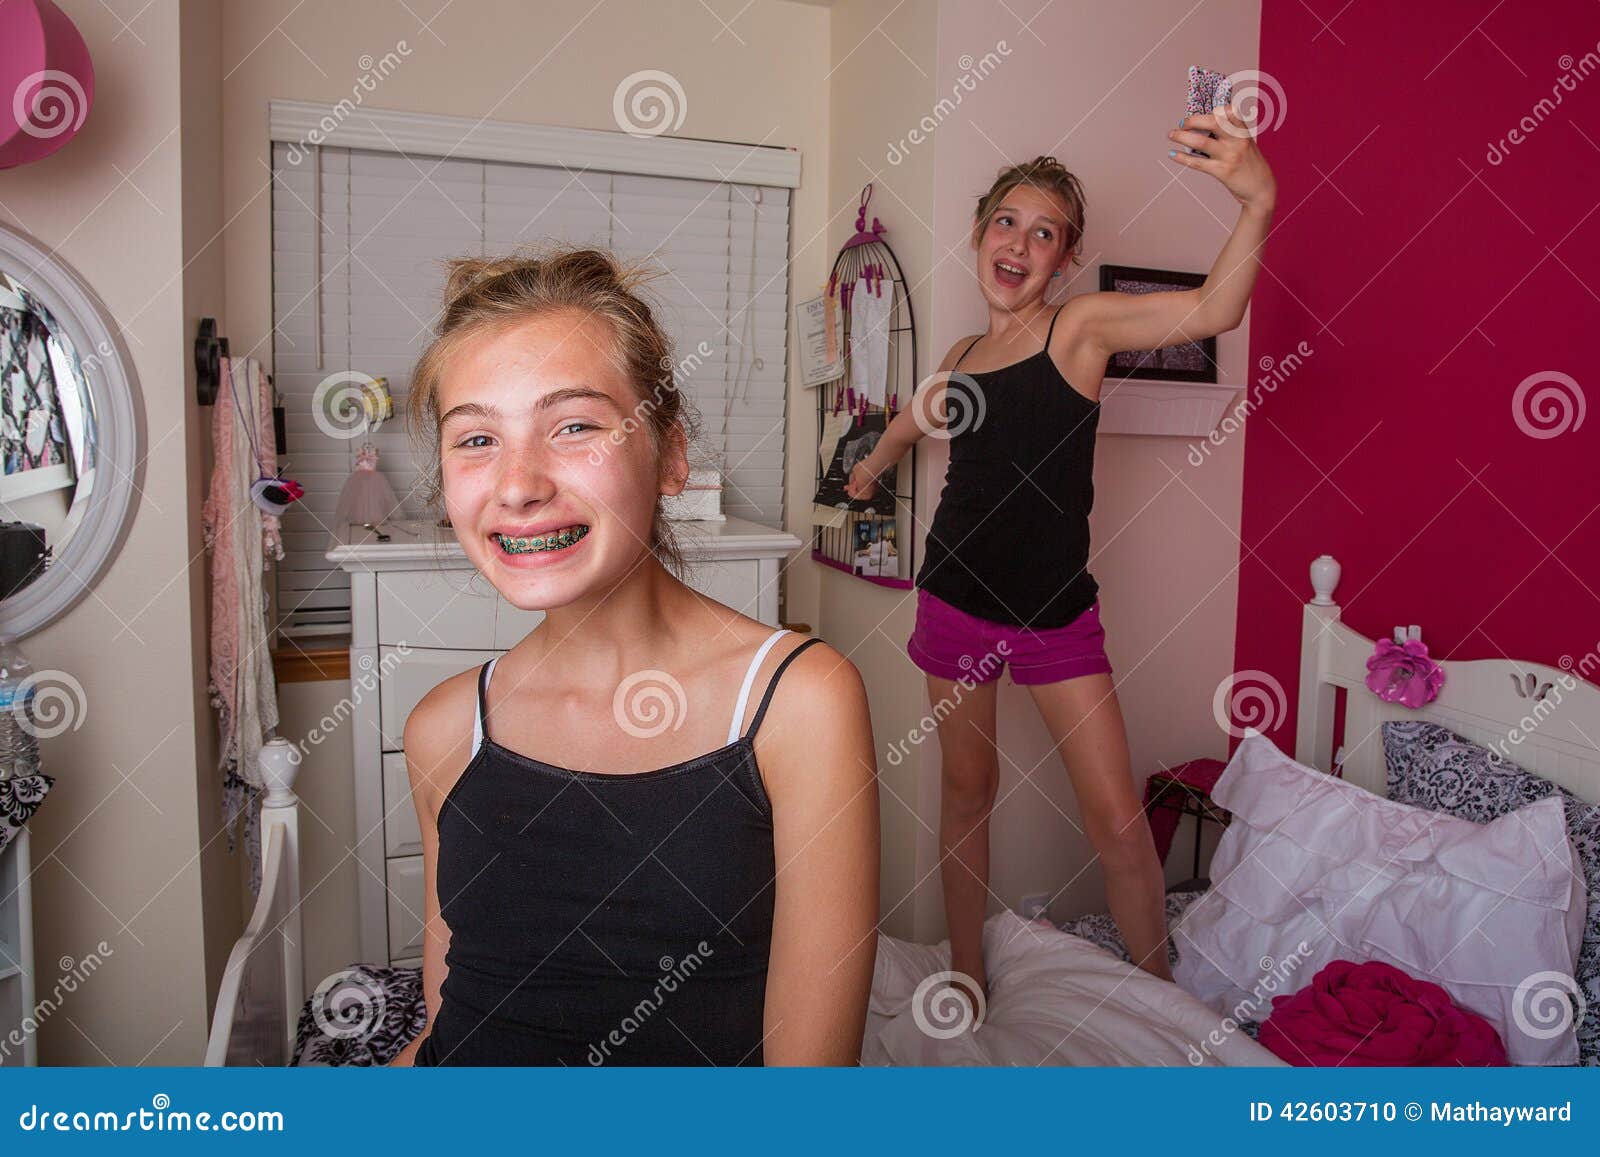 Young Teen Girls Selfies